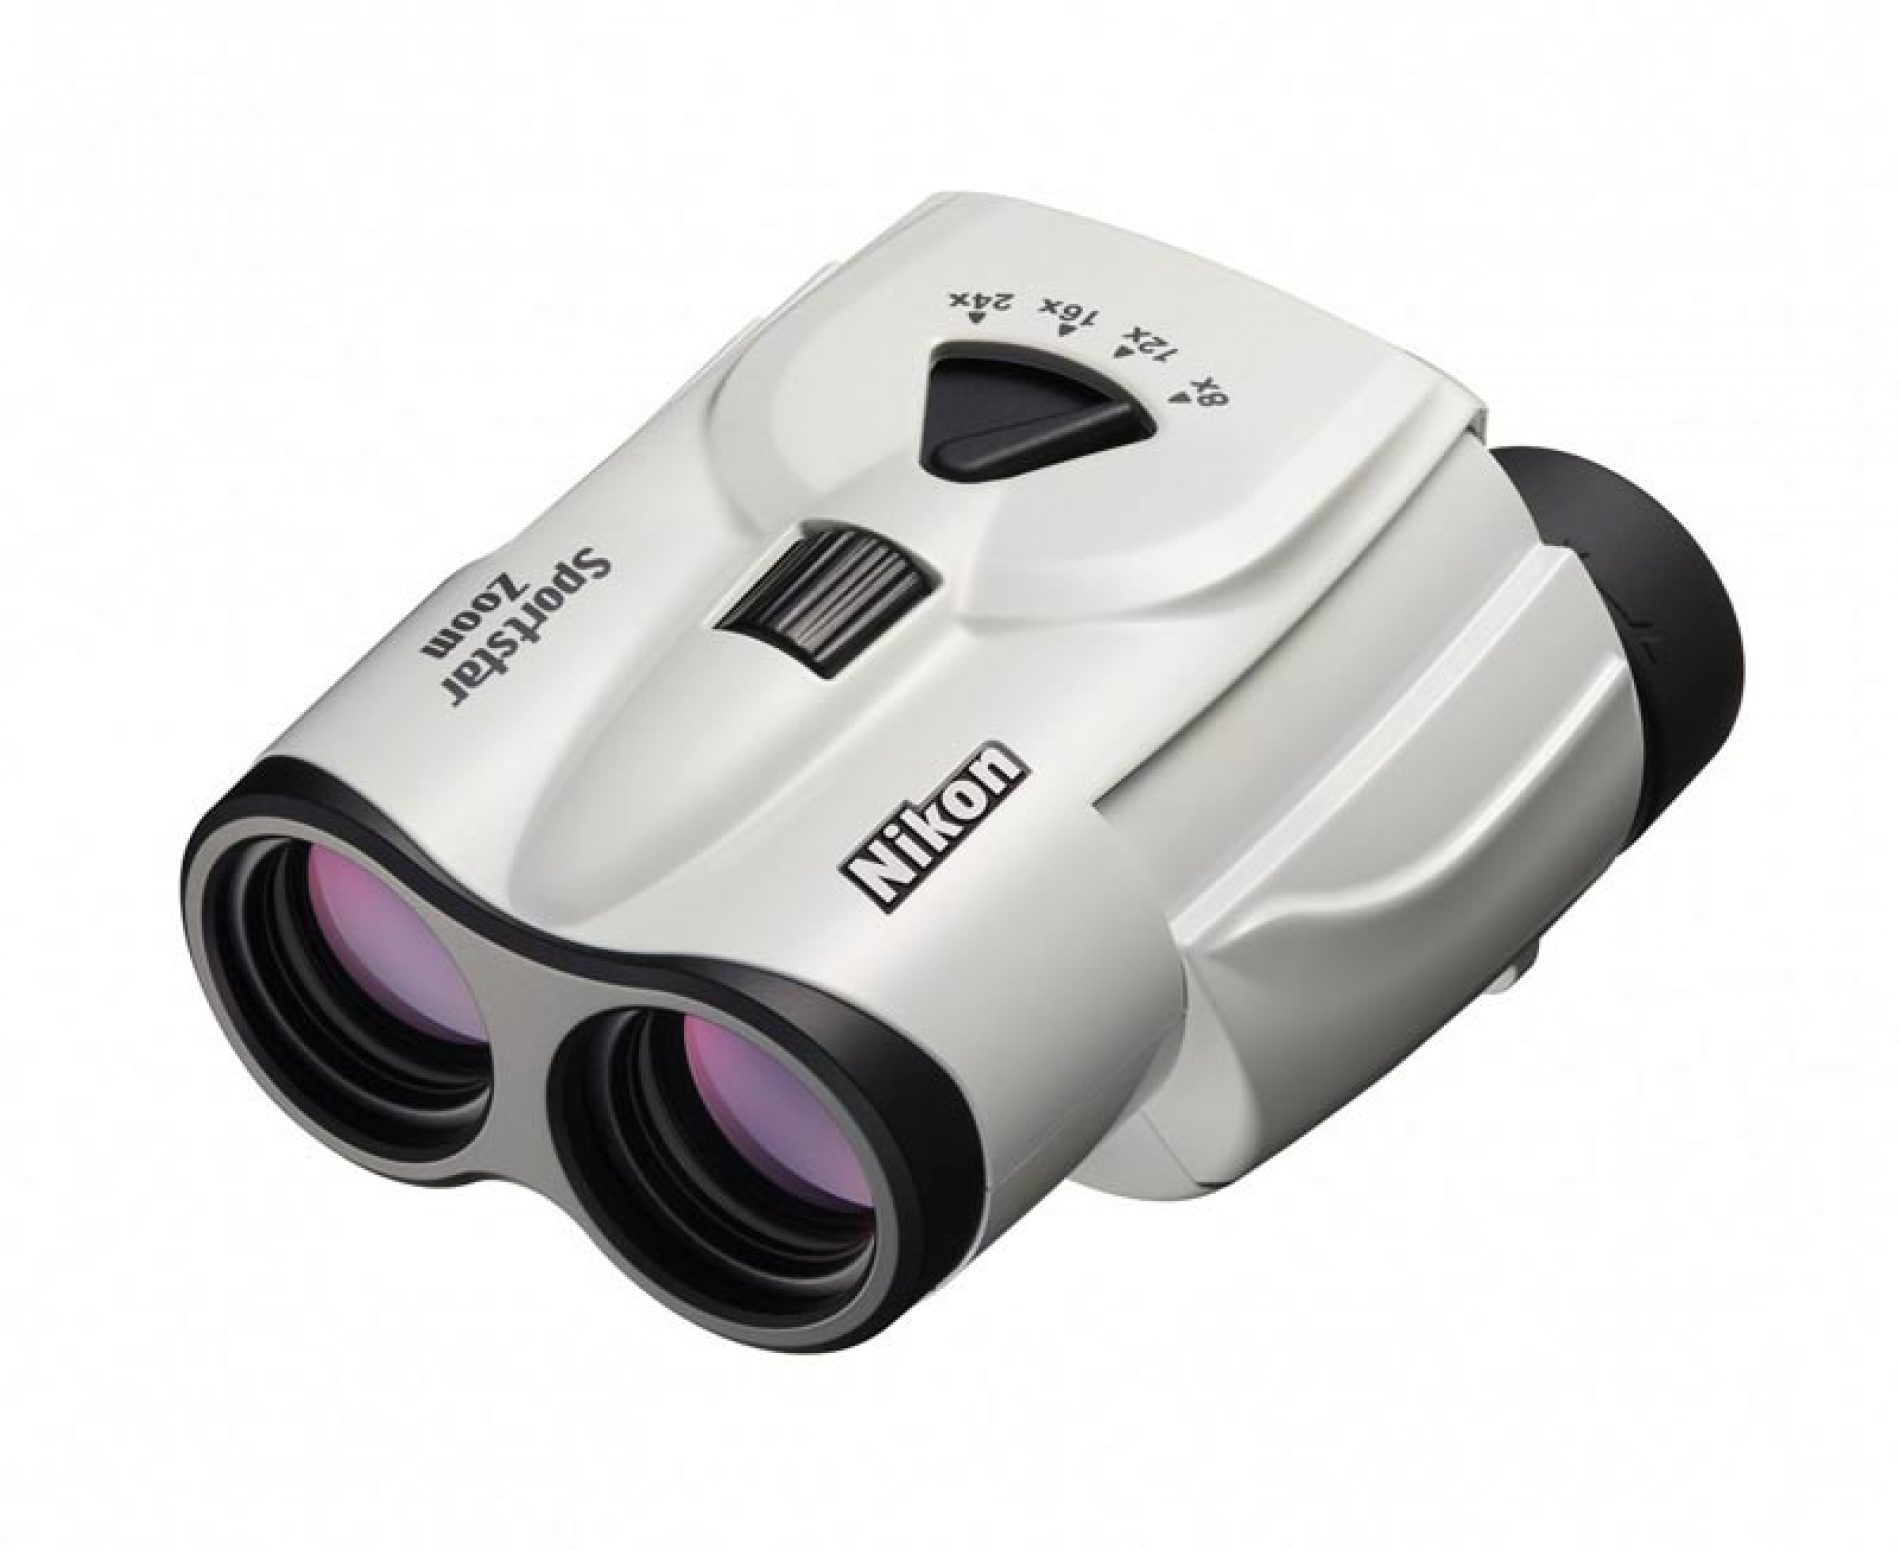 Nikon presenta los binoculares sportstar zoom 8-24×25